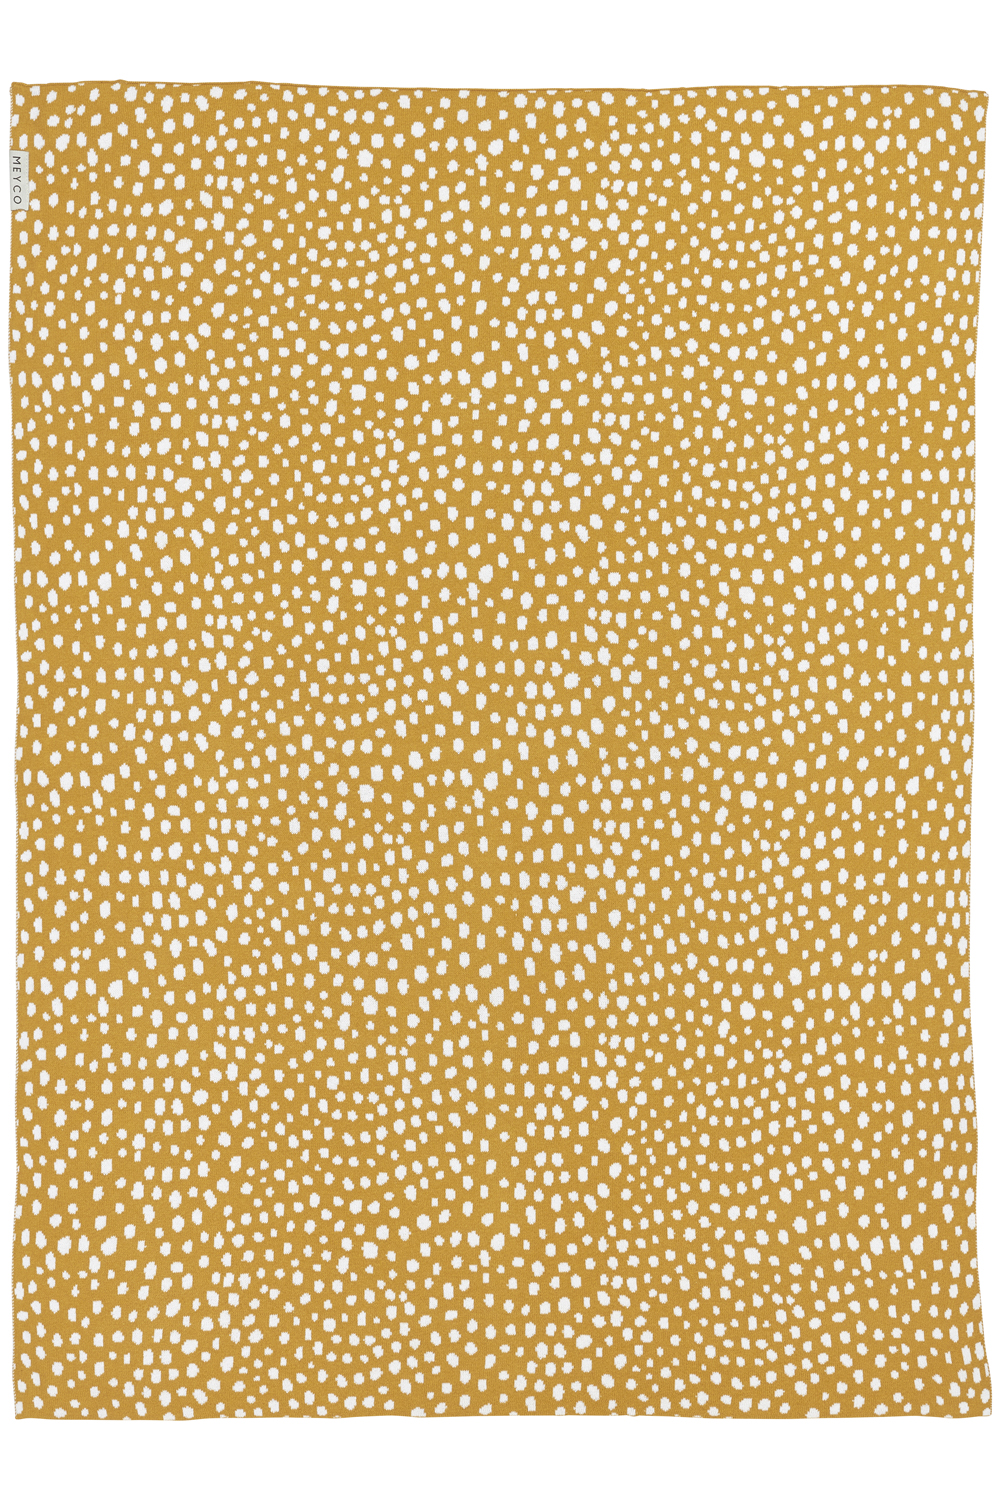 Babydecke groß Cheetah - honey gold - 100x150cm